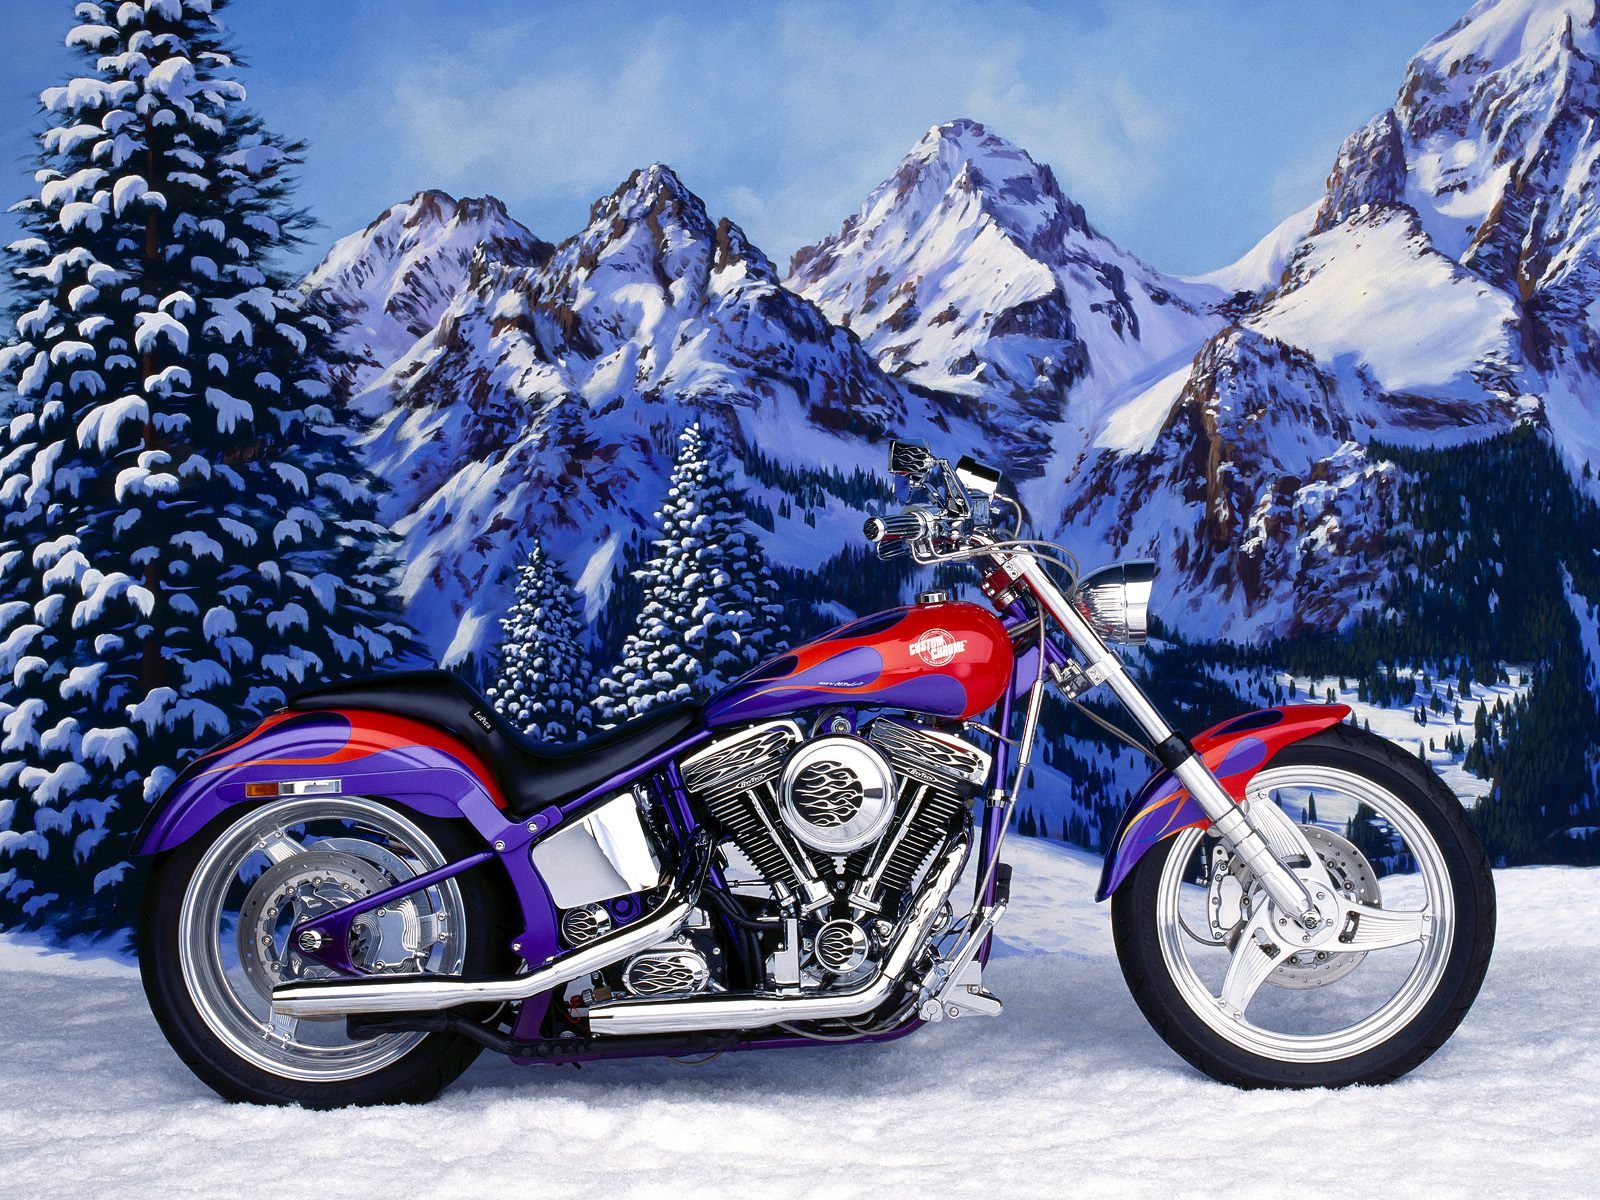 Free Desktop wallpaper downloads Motorcycles Kawasaki